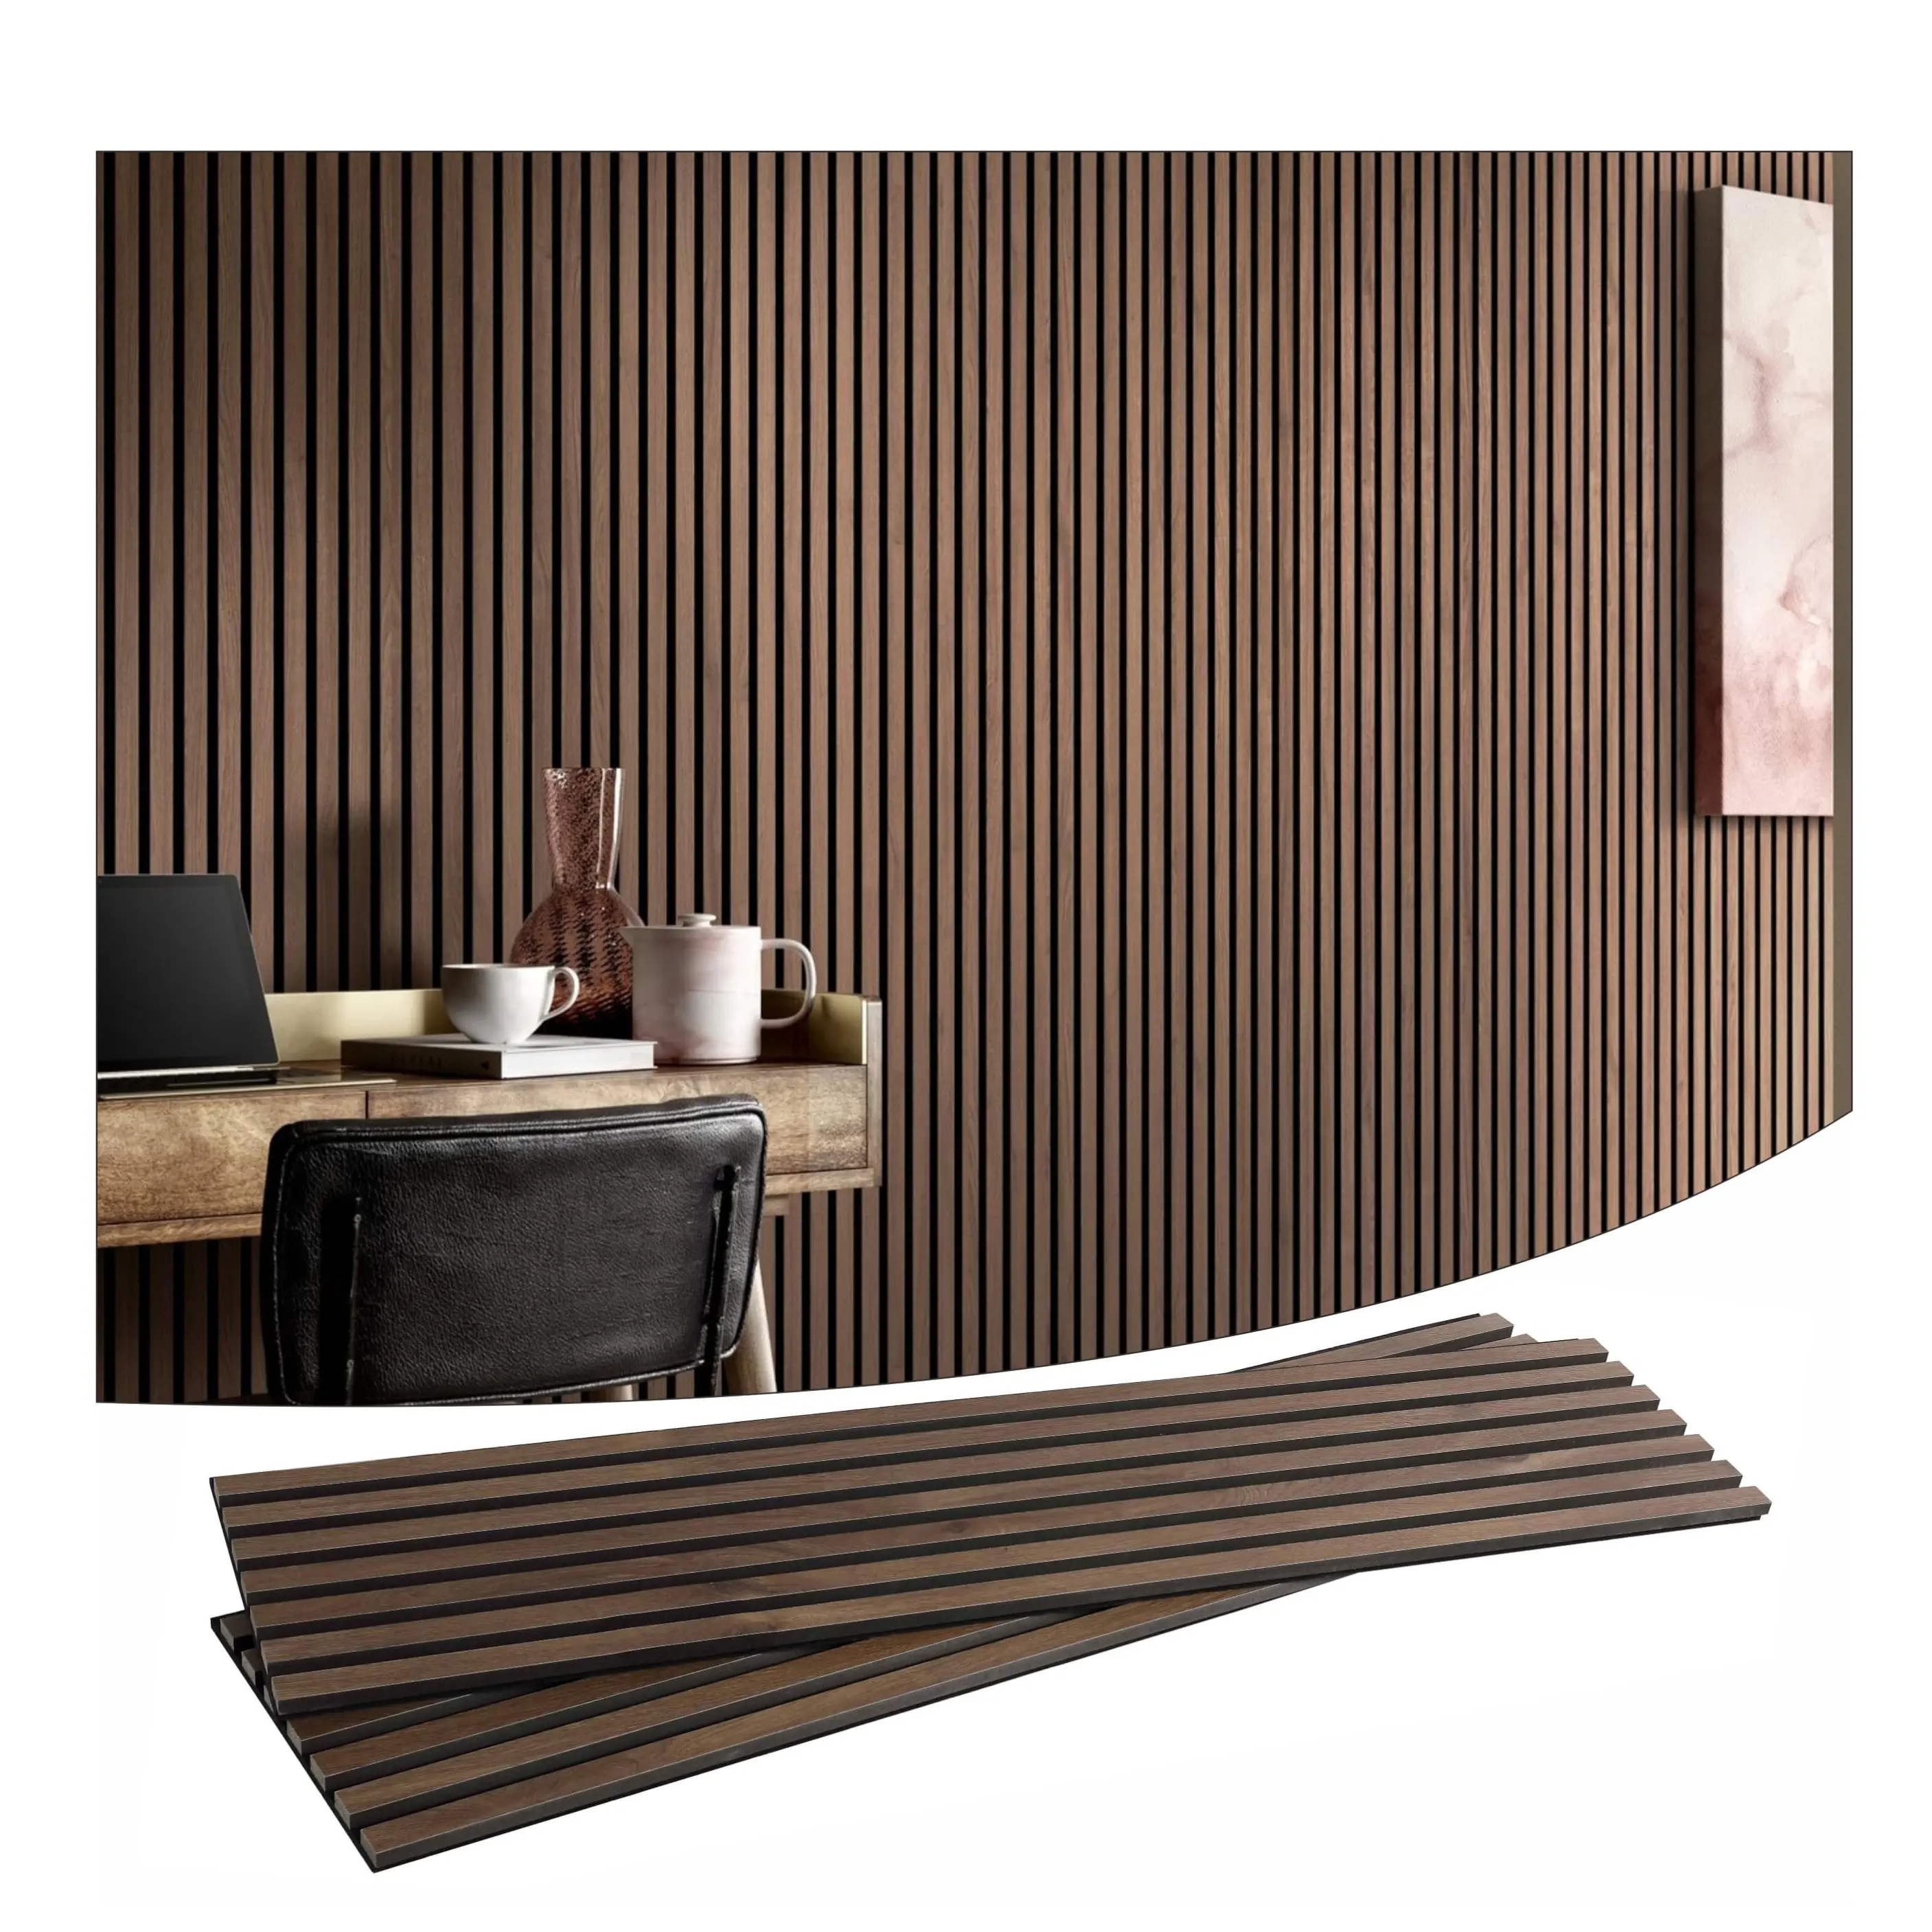 El mejor Panel de pared de listón acústico impermeable ignífugo, Panel de chapa de madera, listones decorativos 3D, paneles acústicos para decoración de pared Interior